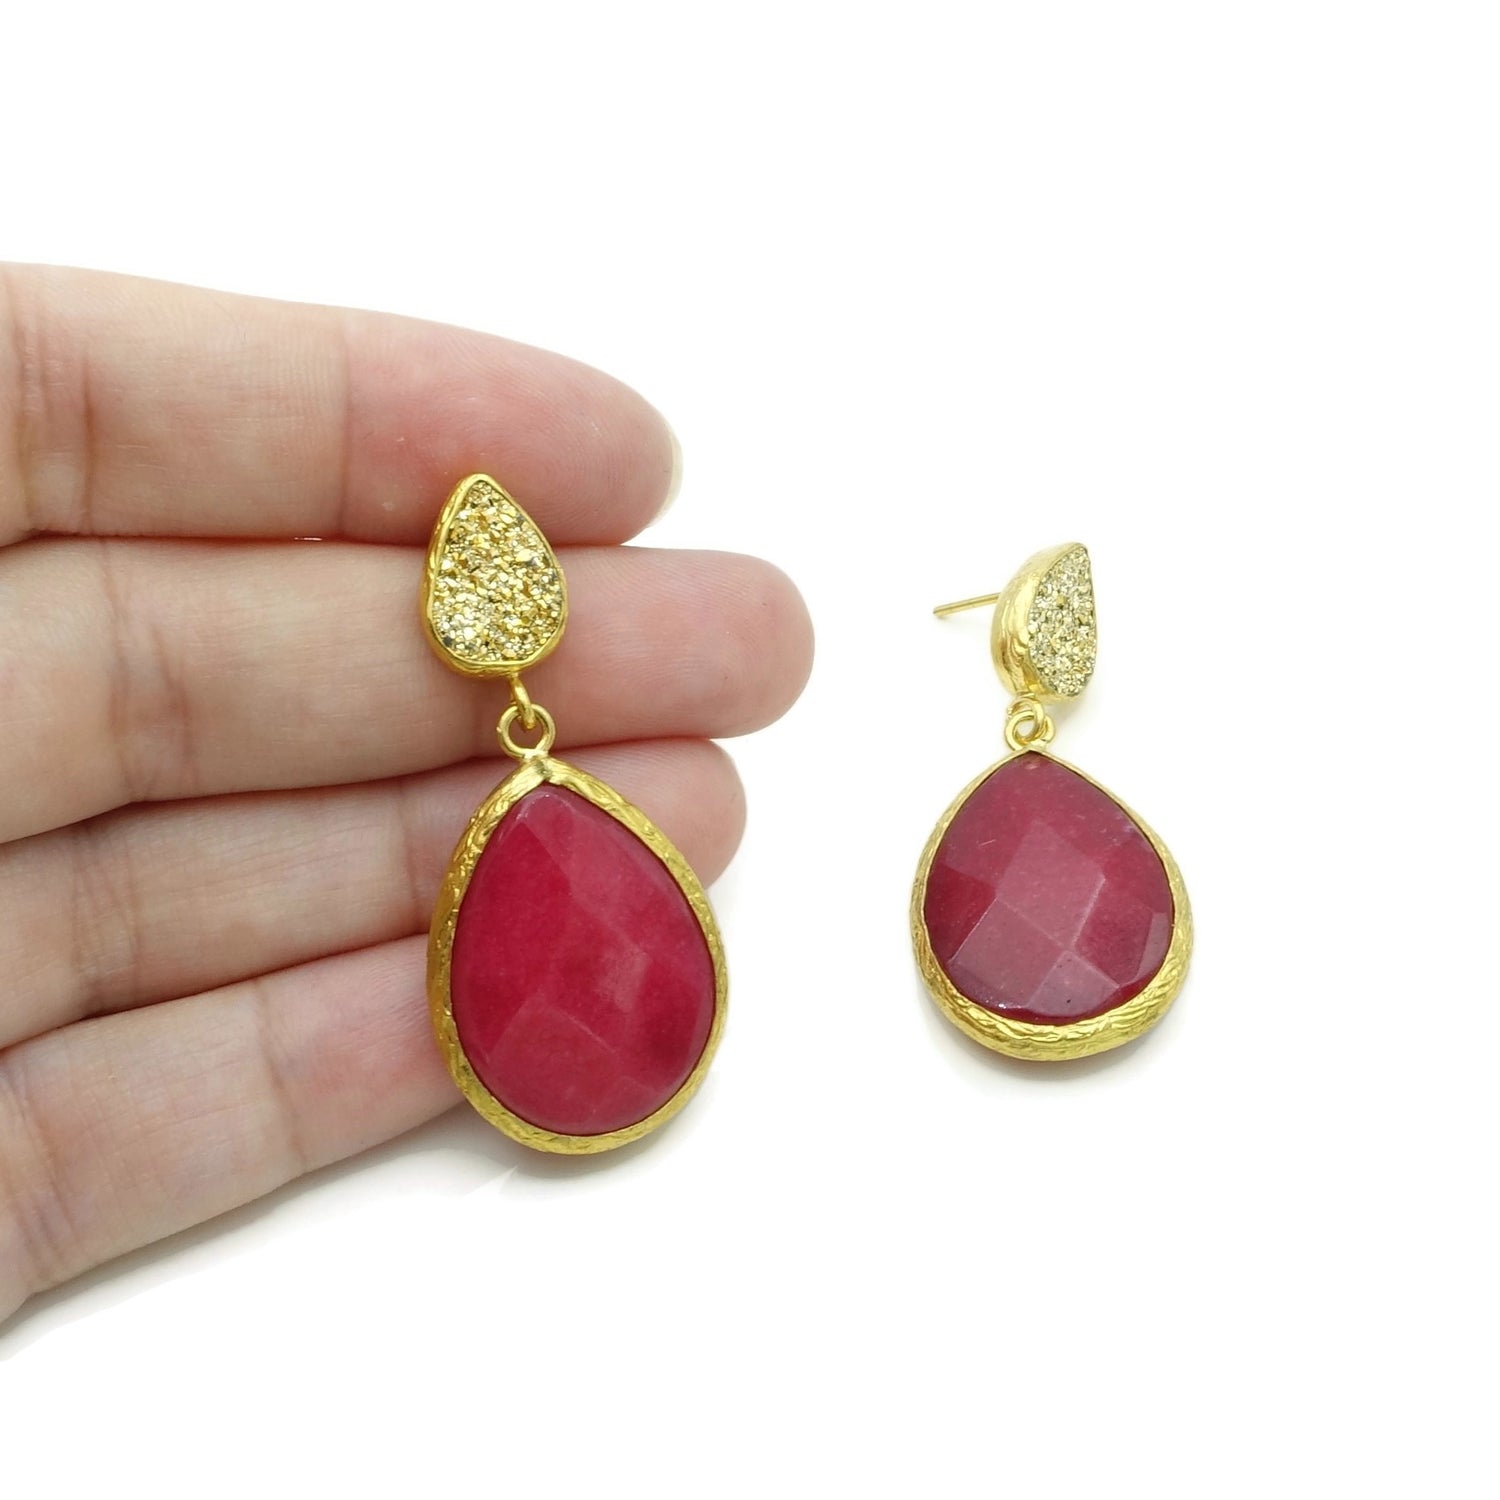 Aylas Druzy, Agate semi precious gemstone earrings - 21ct Gold plated- Handmade